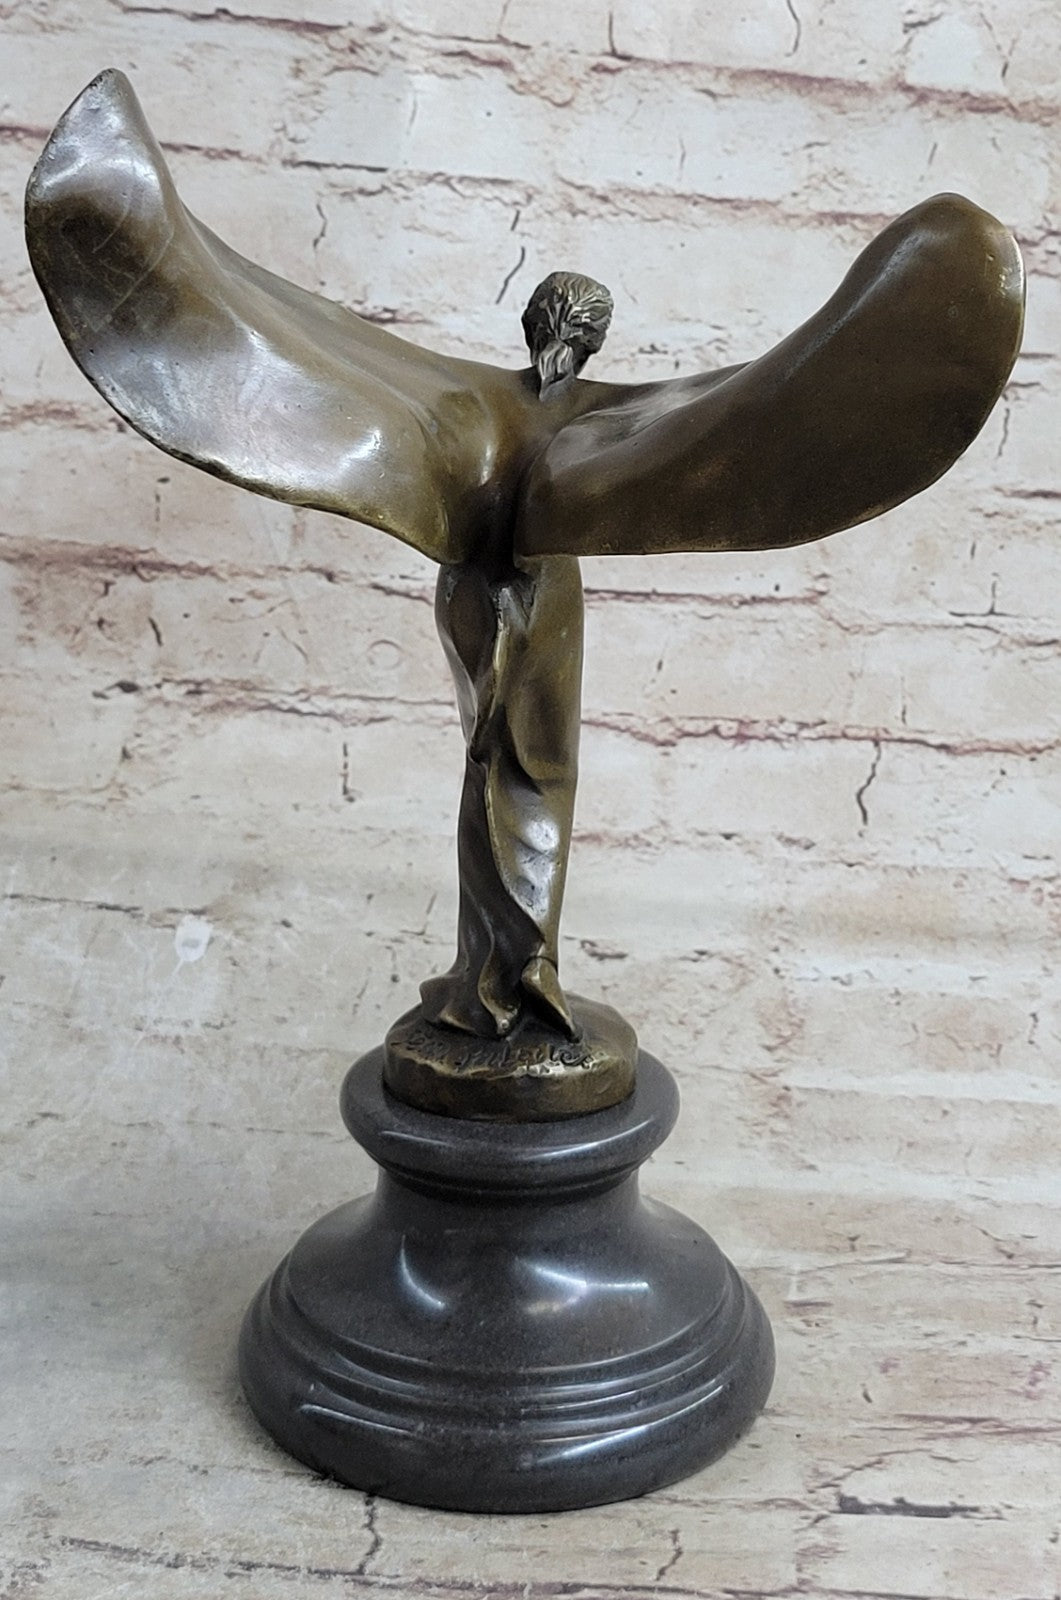 Rolls Royce Hood Ornament Cast Bronze Flying Lady "Spirit of Ecstasy" Sculpture